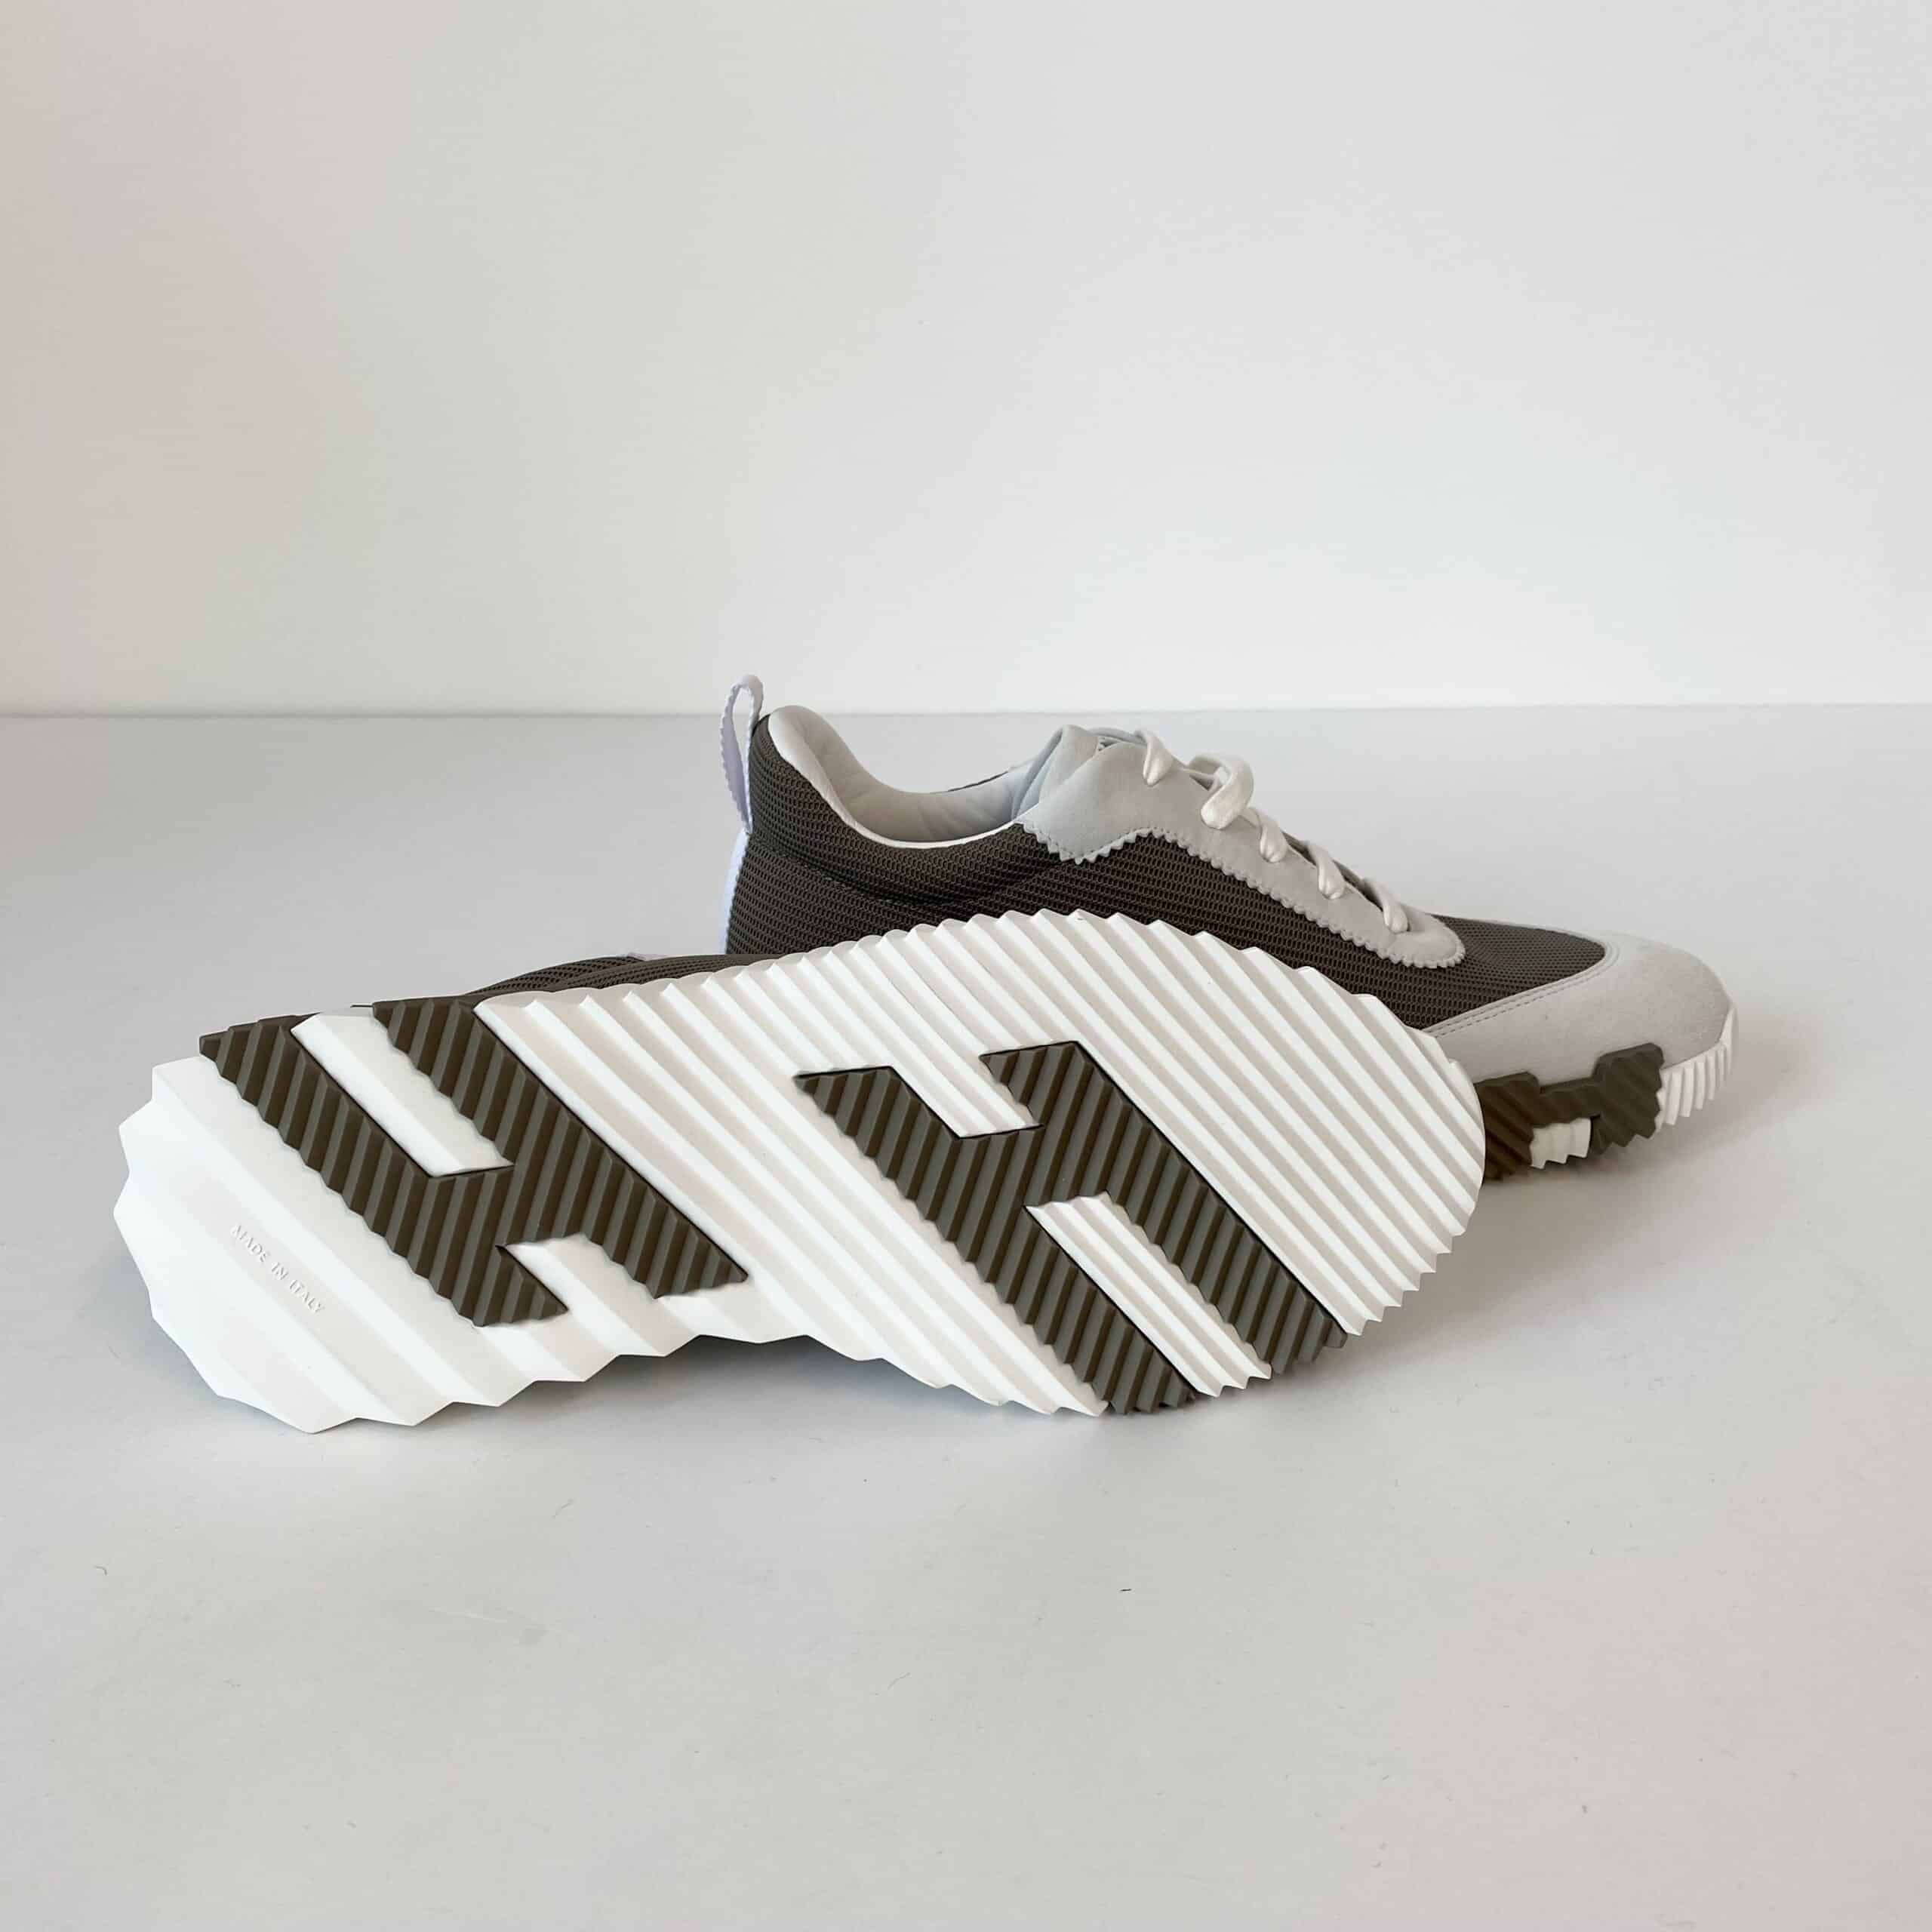 Hermes Bouncing Sneakers Khaki/White Size 42.5 EU - The Luxury Flavor